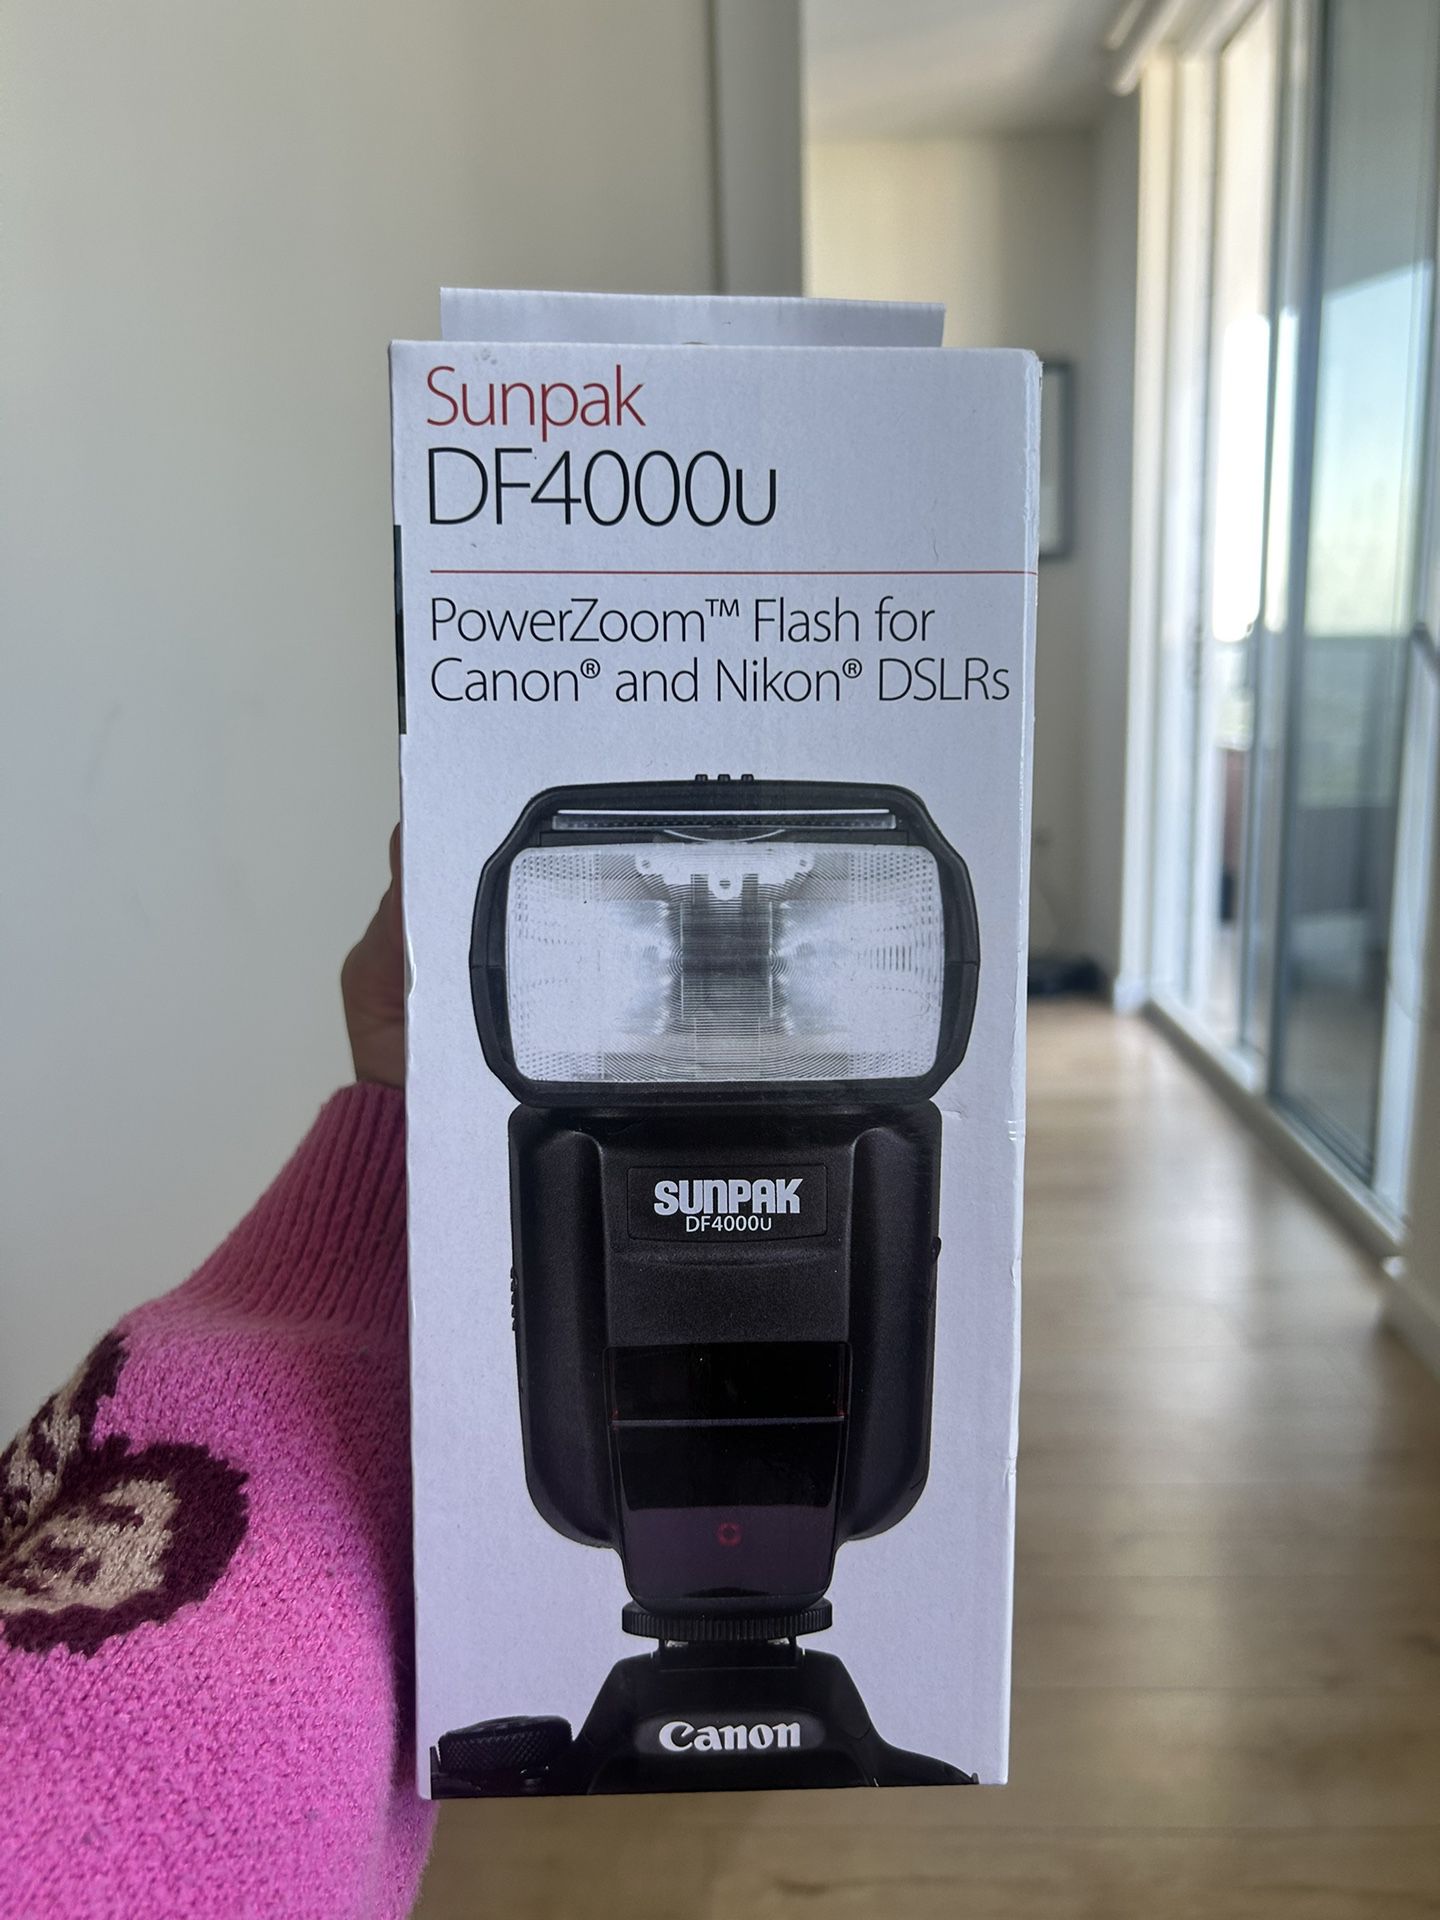 Sunpak DF4000u Flash